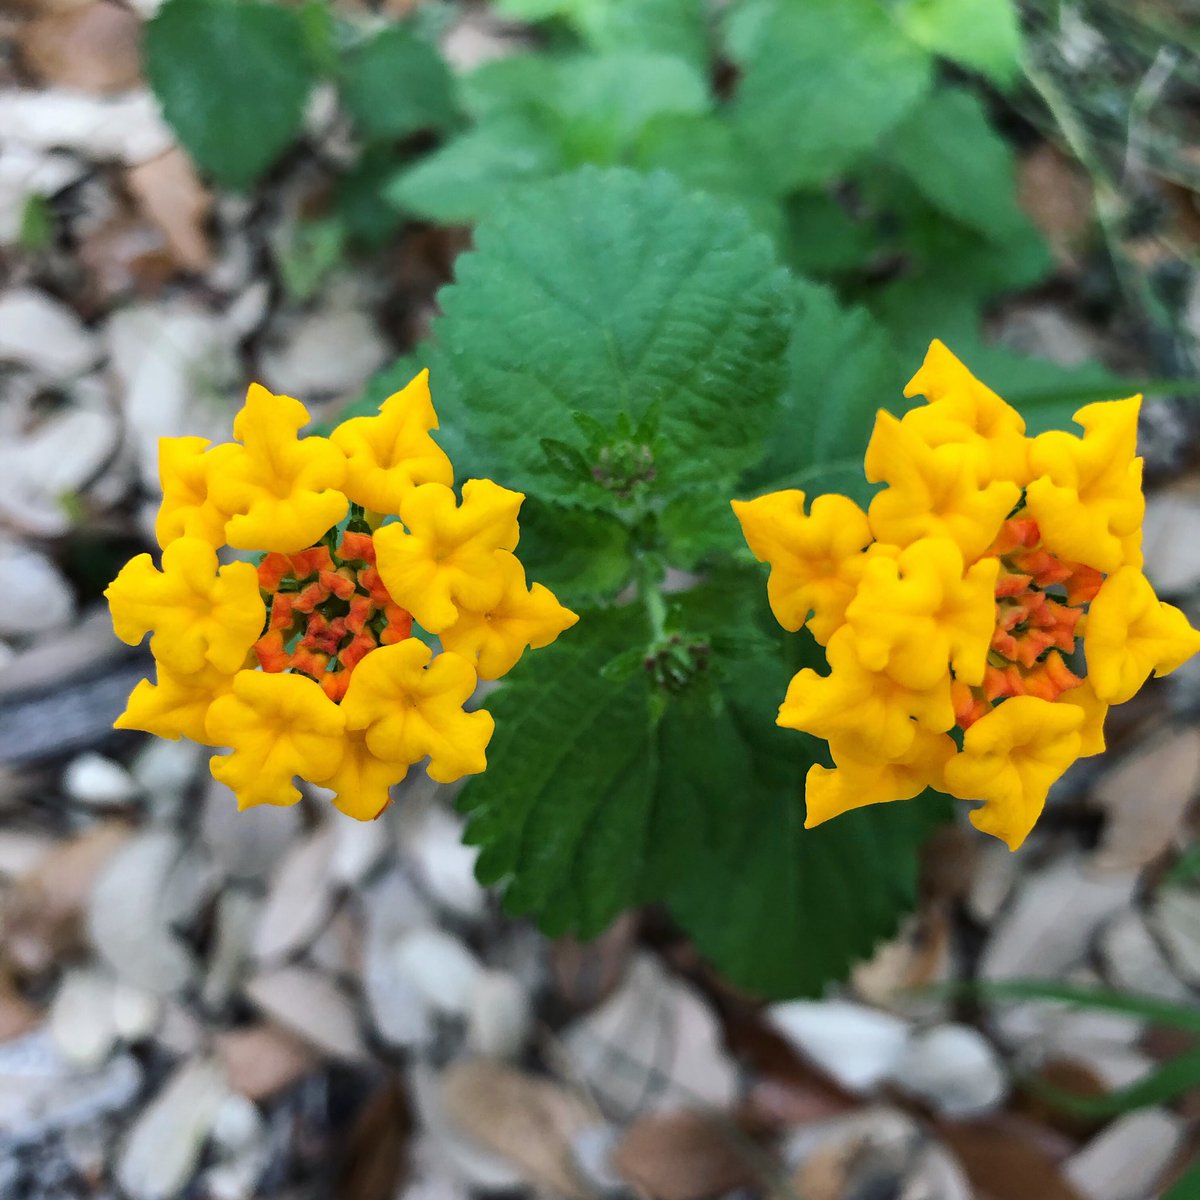 The wild lantana on the property is thriving in our summer heat! #nativevegetation #wildflowers 
#lantana #texaswildflowers #italiancowboytx #scenesfromitaliancowboy #texascoast #coastalbend #rockportfulton #texas